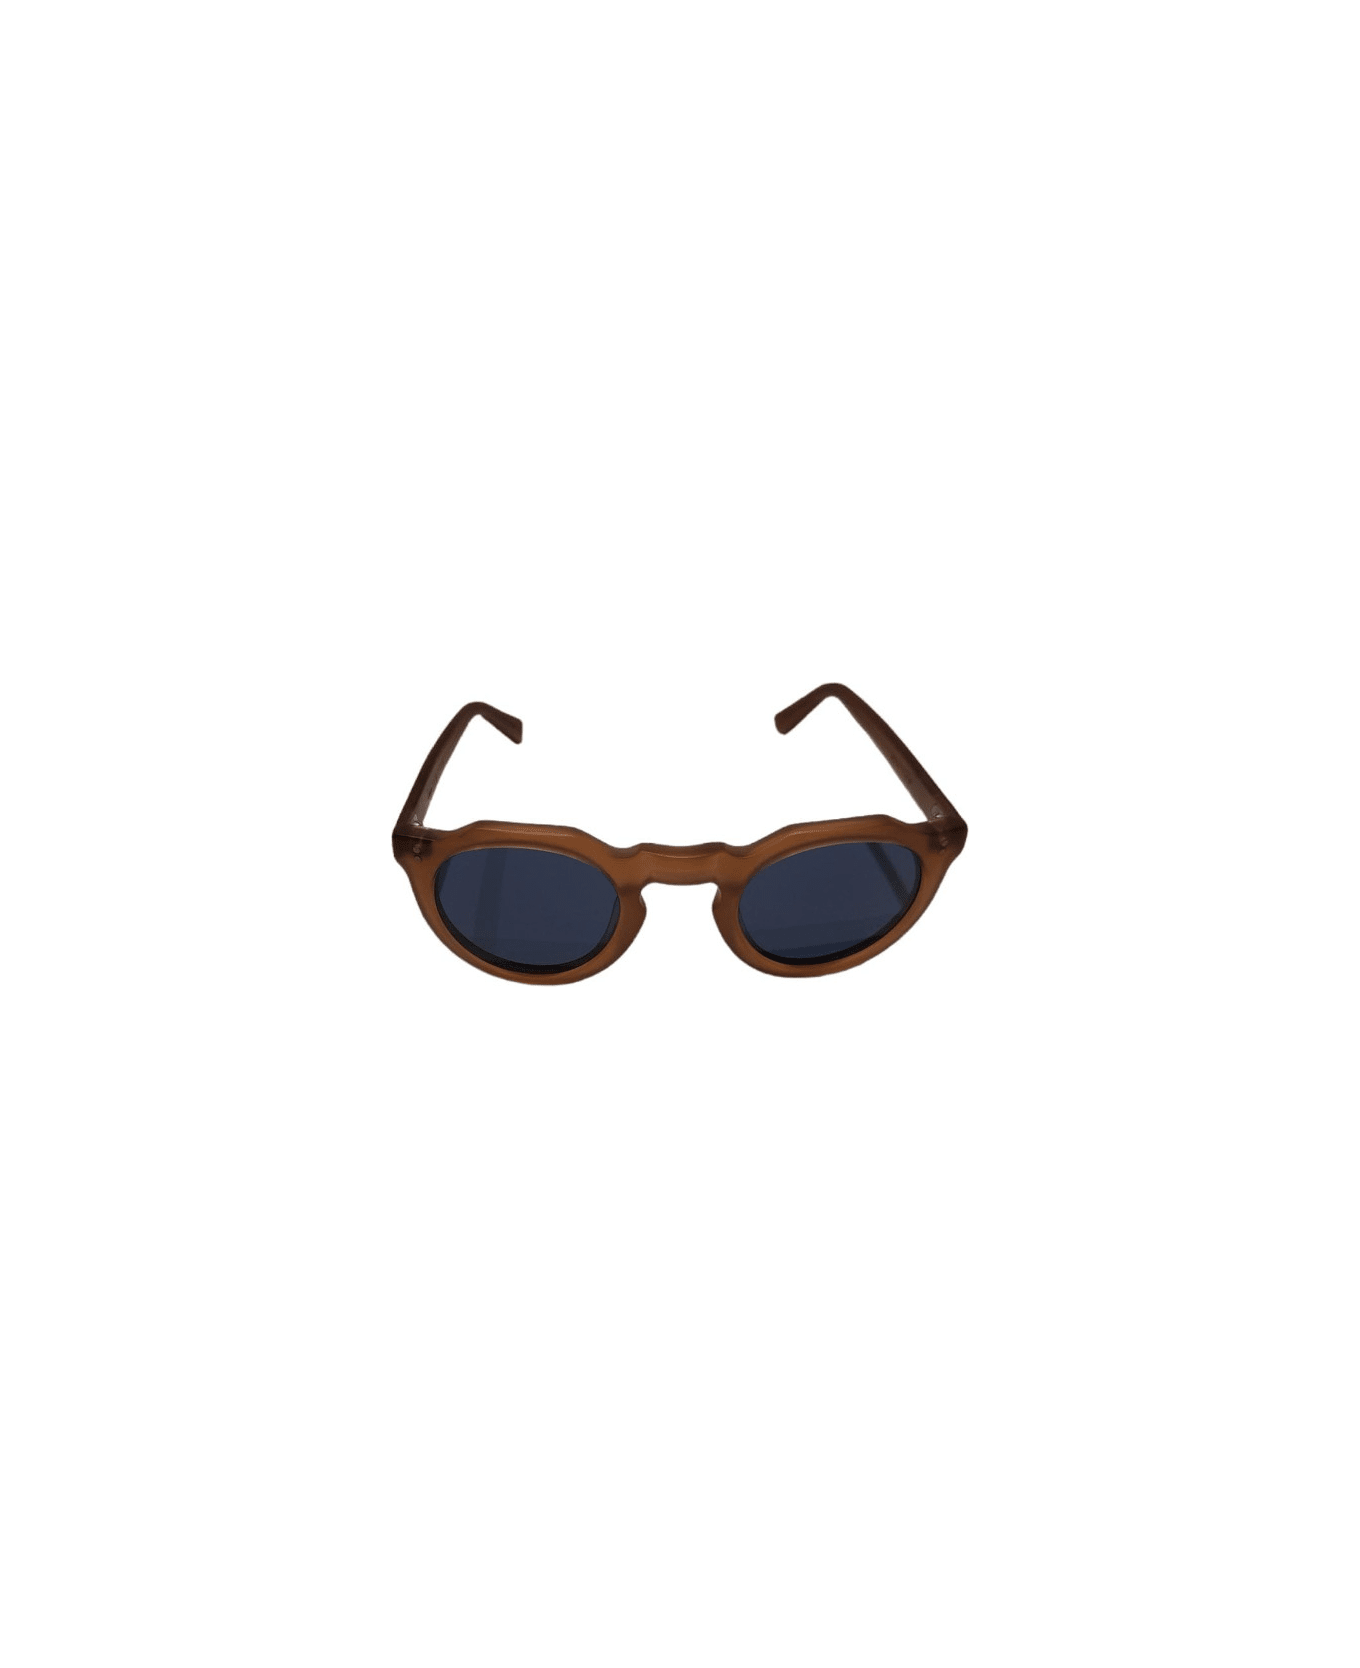 Lesca Picas COM Sunglasses - Cognac matt